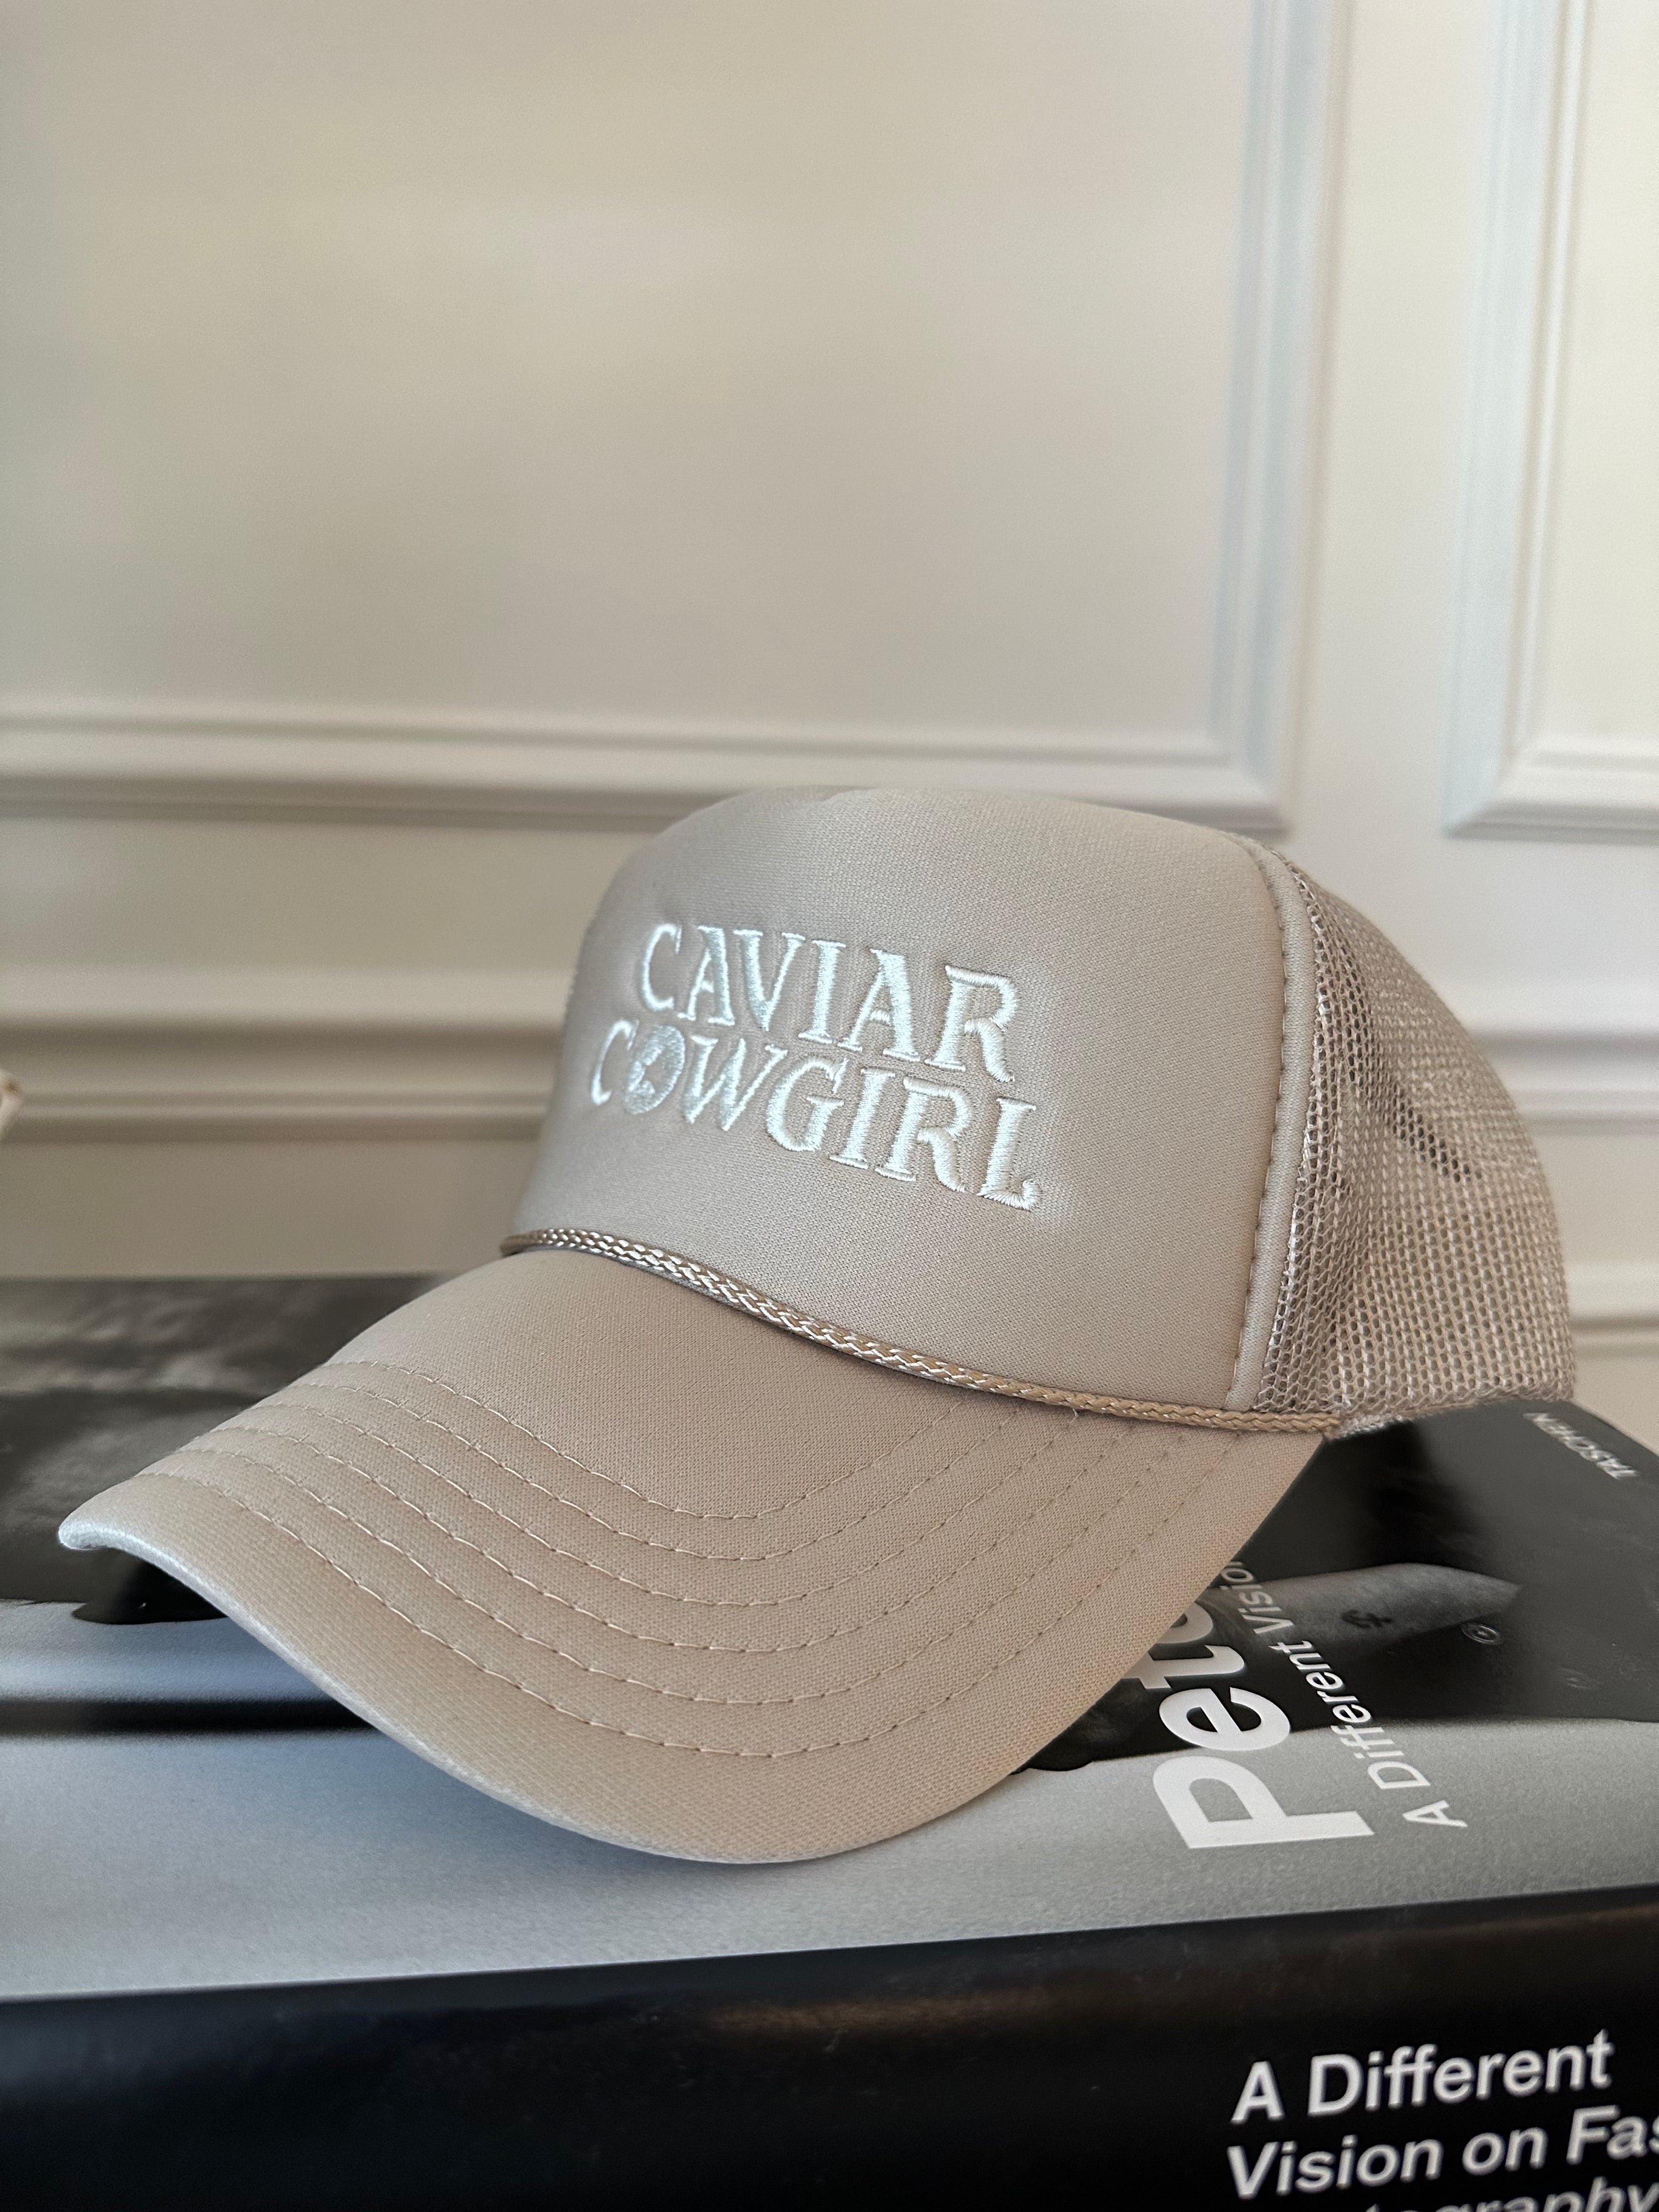 Caviar Cowgirl Trucker Hat